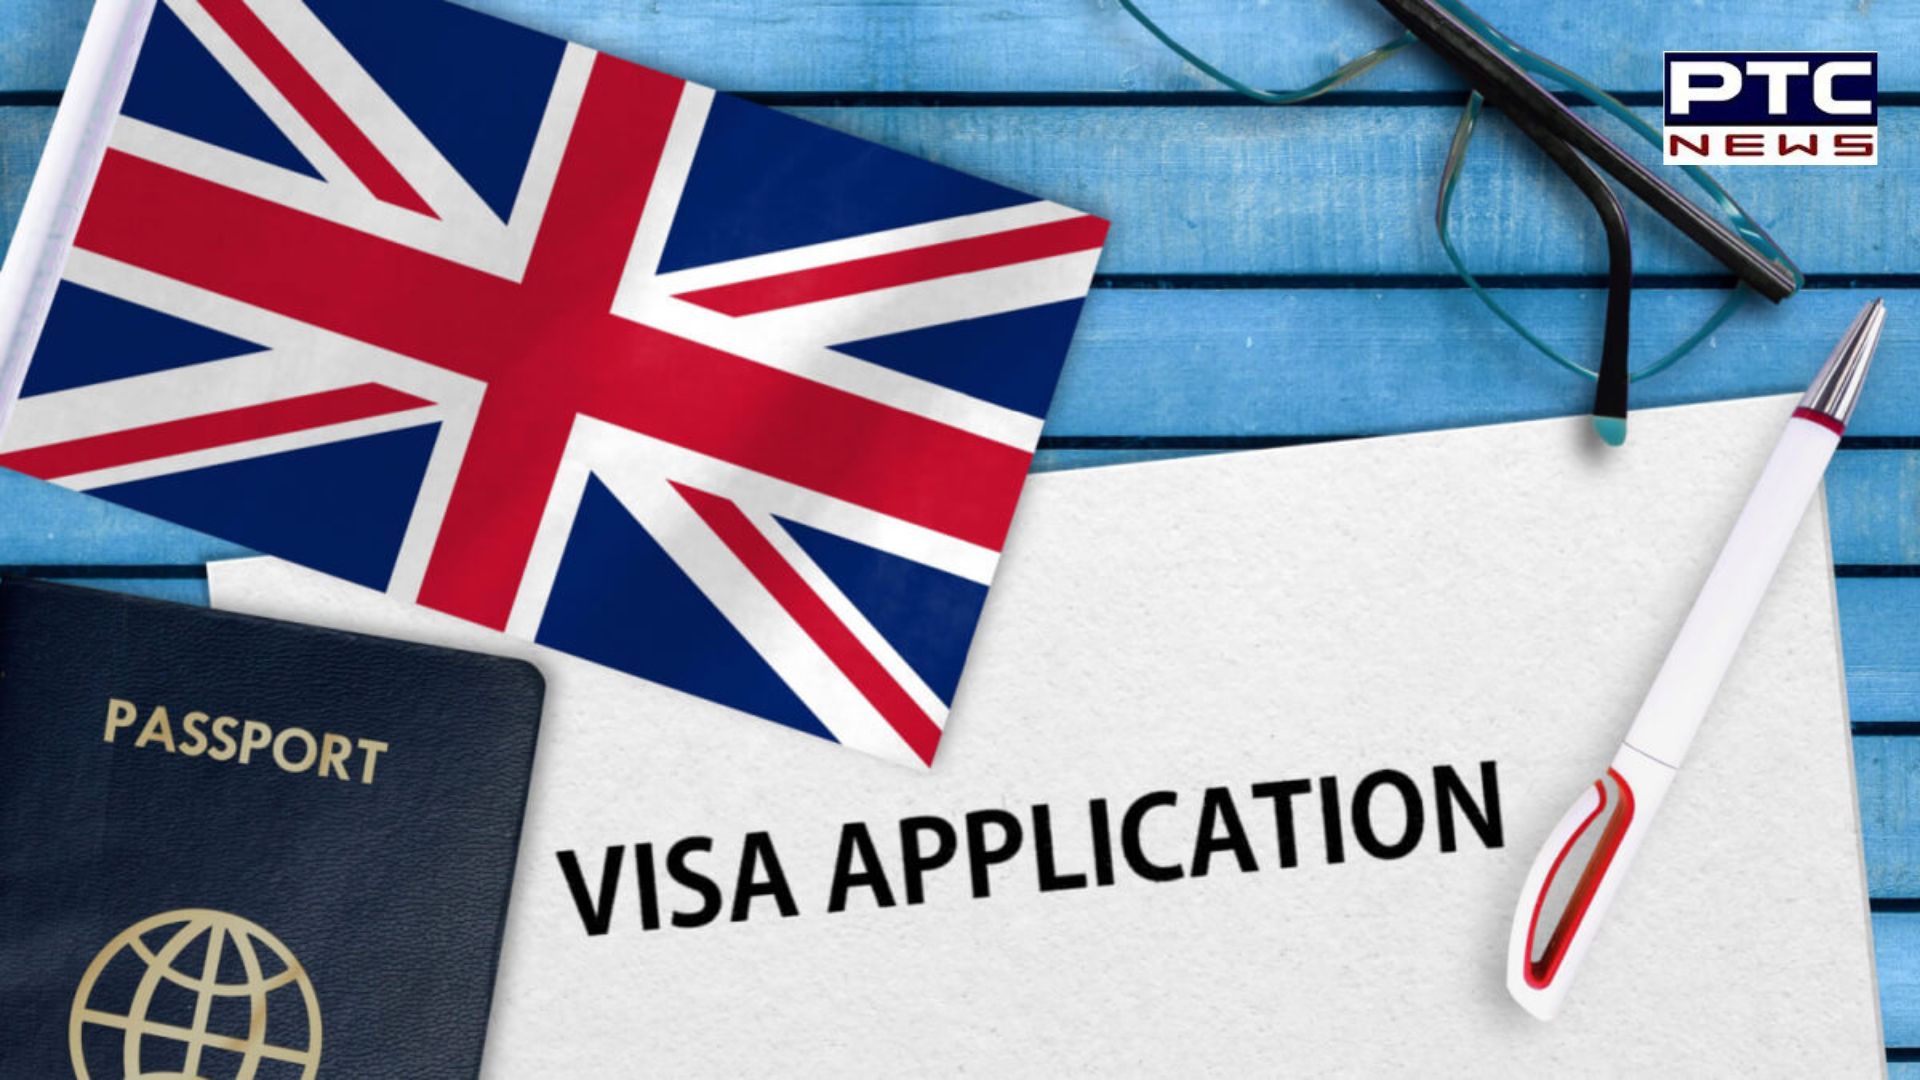 UK Visa Rules: ਬ੍ਰਿਟੇਨ ਨੇ ਬਦਲੇ ਵੀਜ਼ਾ ਨਿਯਮ, ਜਾਣੋ ਭਾਰਤੀ ਵਿਦਿਆਰਥੀਆਂ 'ਤੇ ਅਸਰ